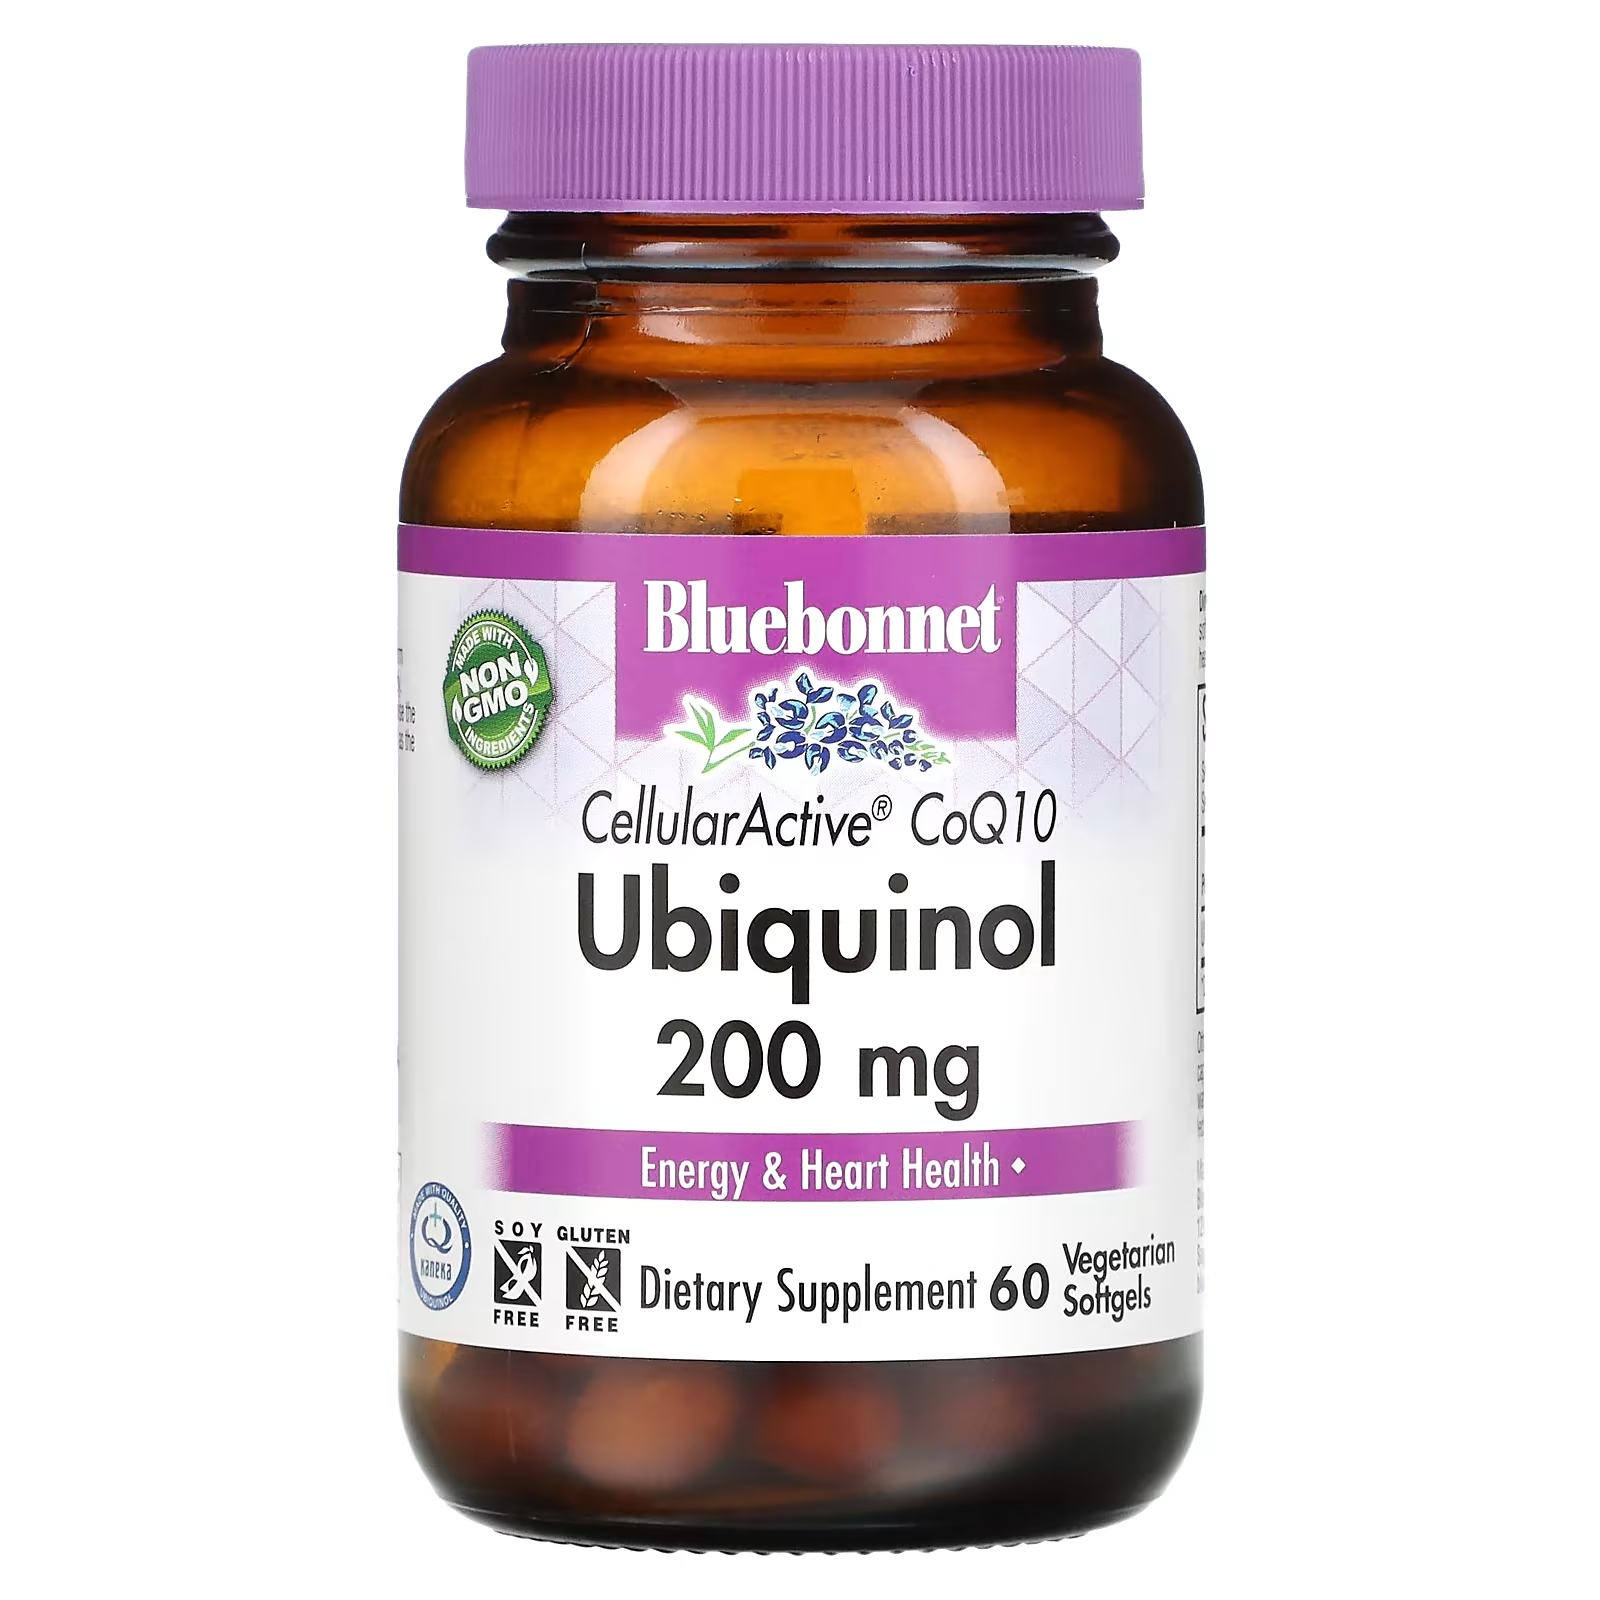 Bluebonnet Nutrition Убихинол CellullarActive CoQ10 200 мг, 60 растительных капсул bluebonnet nutrition l глутатион 100 мг 60 растительных капсул